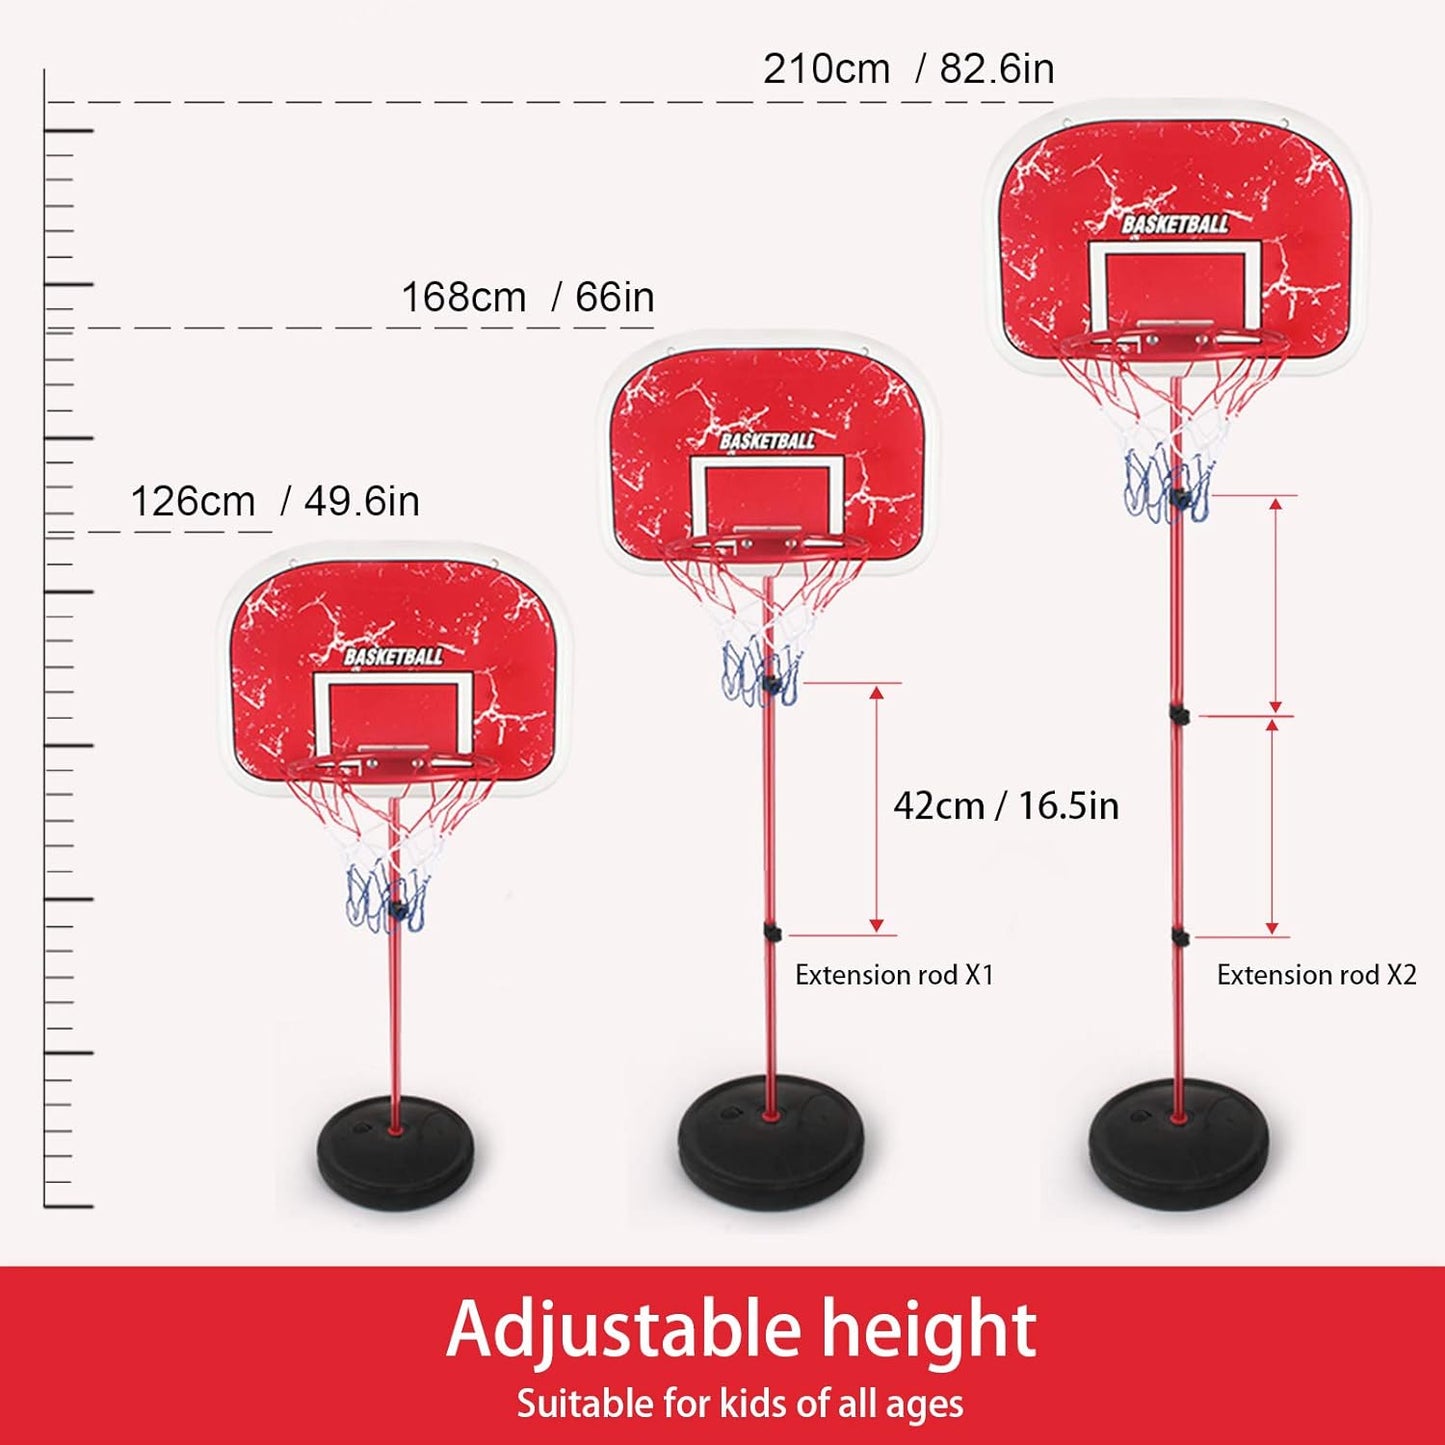 Children's Height Adjustable Basketball Stand